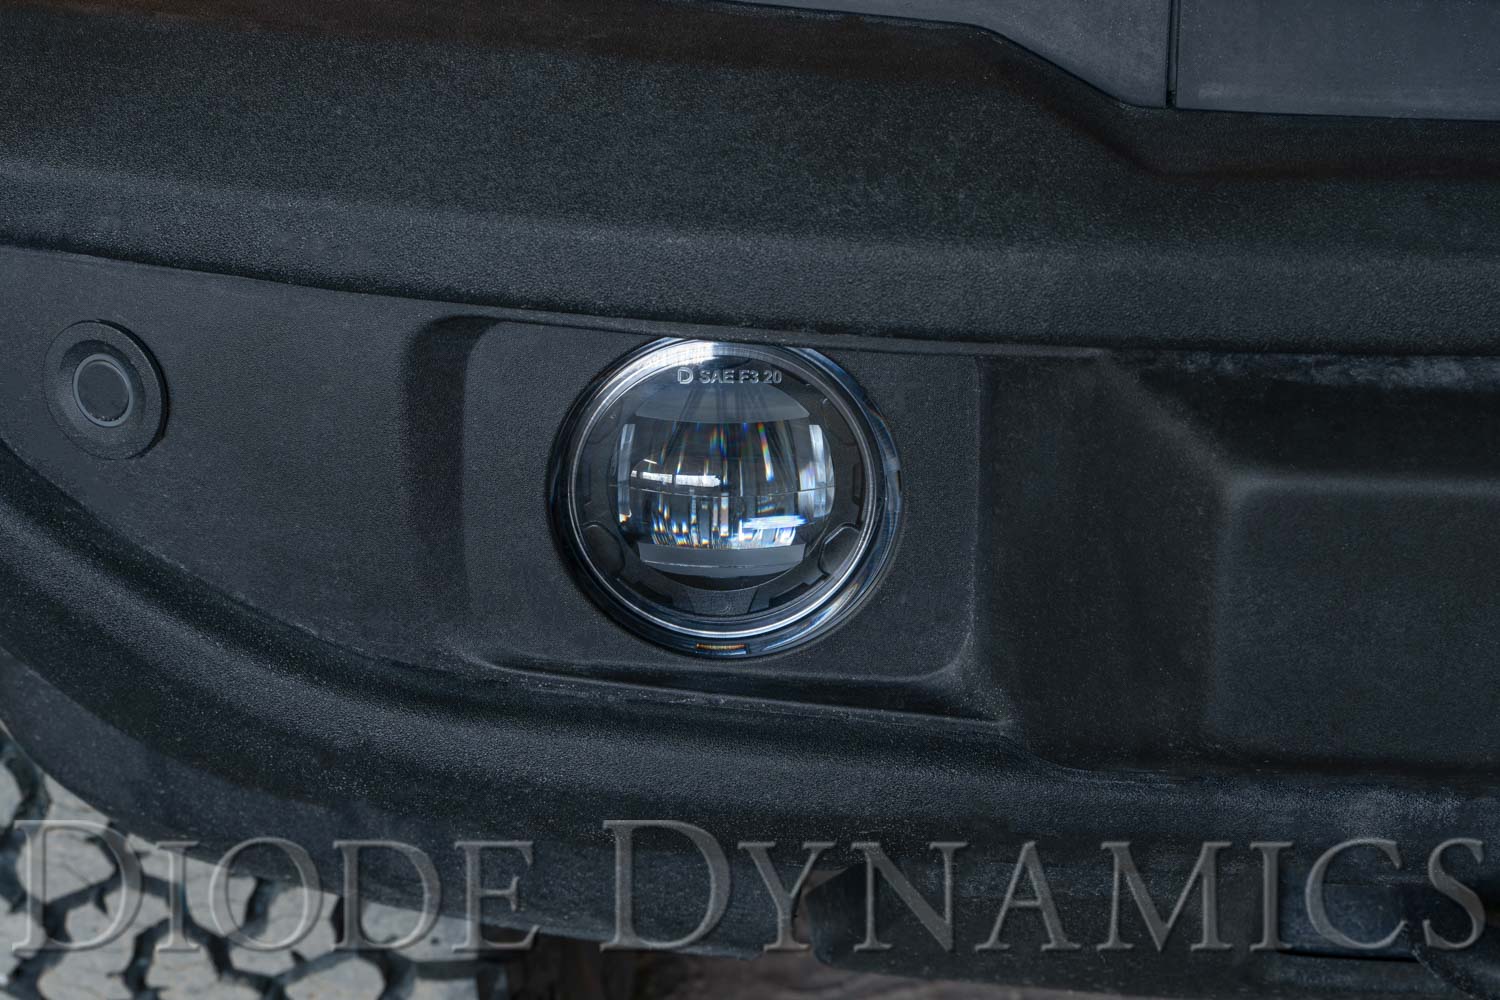 Elite Series Fog Lamps for 2016 Nissan Titan XD Pair Yellow 3000K Diode Dynamics